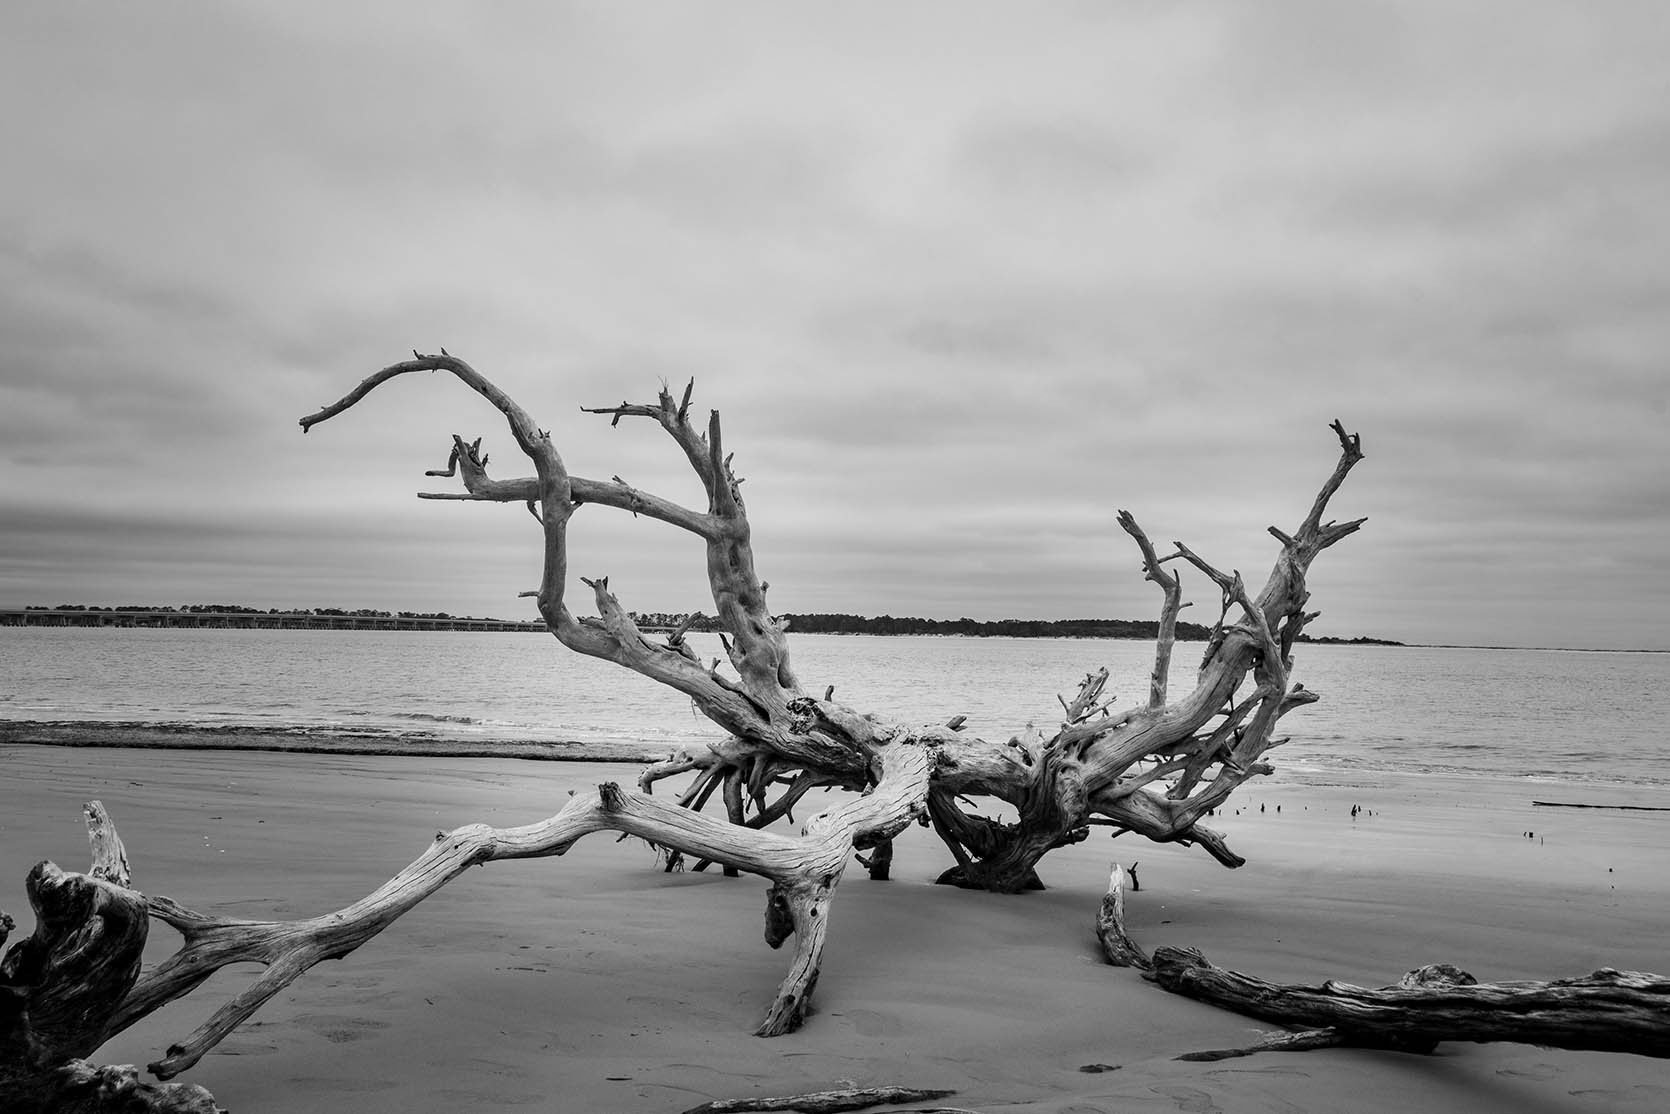 driftwood-on-boneyard-beach-florida-3-black-and-white-rustic-coastal-landscape-photo.jpeg